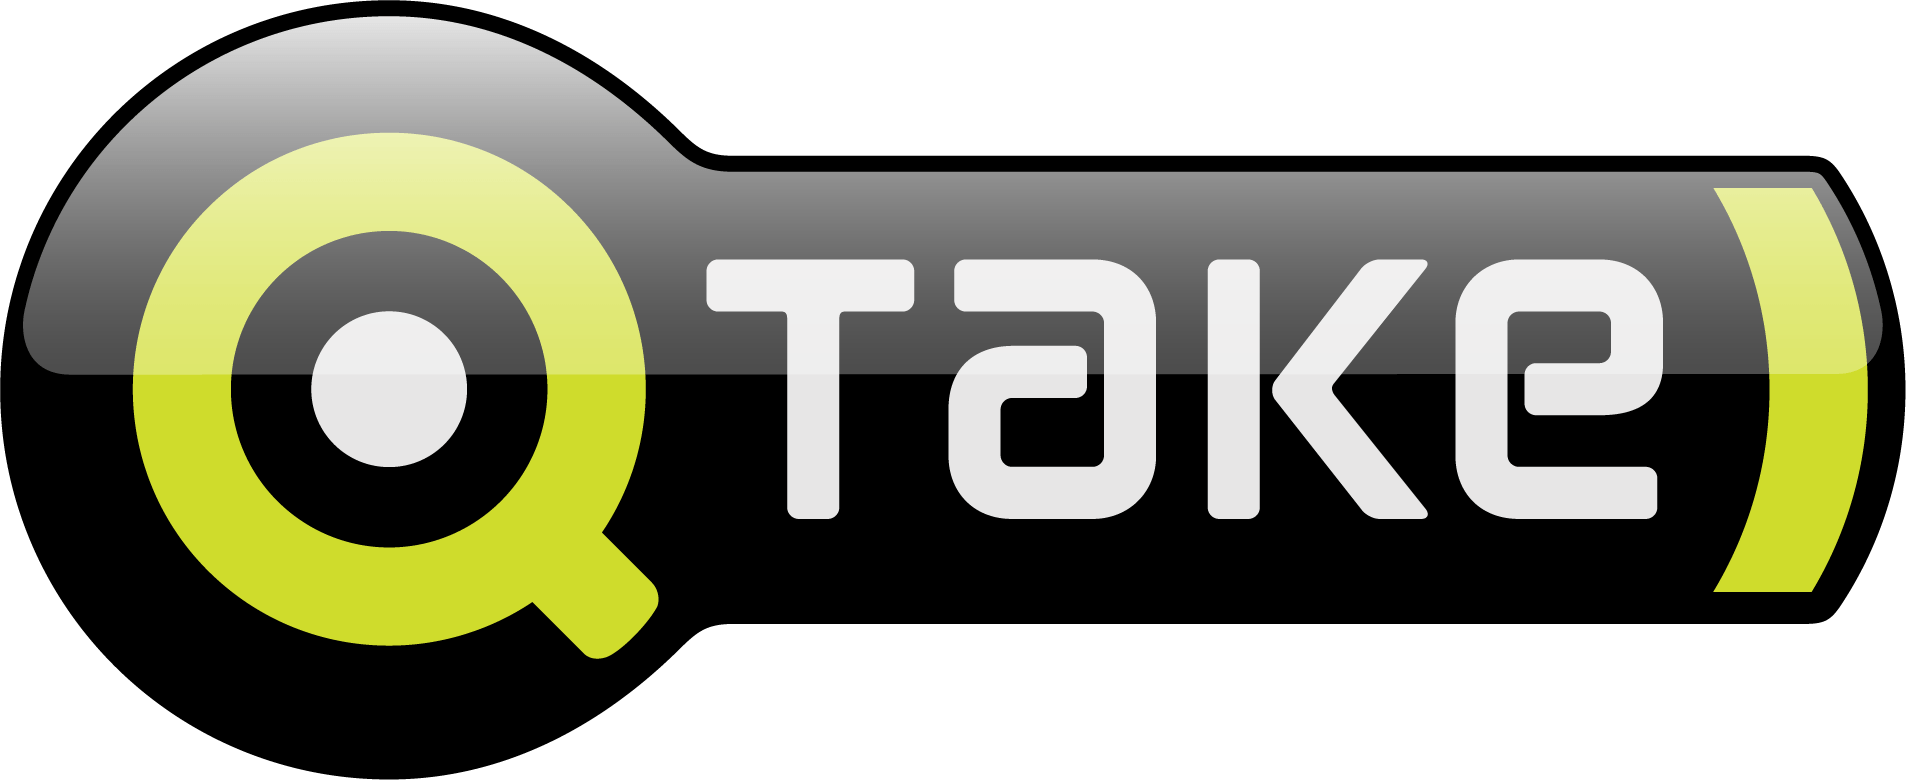 QTAKE Software